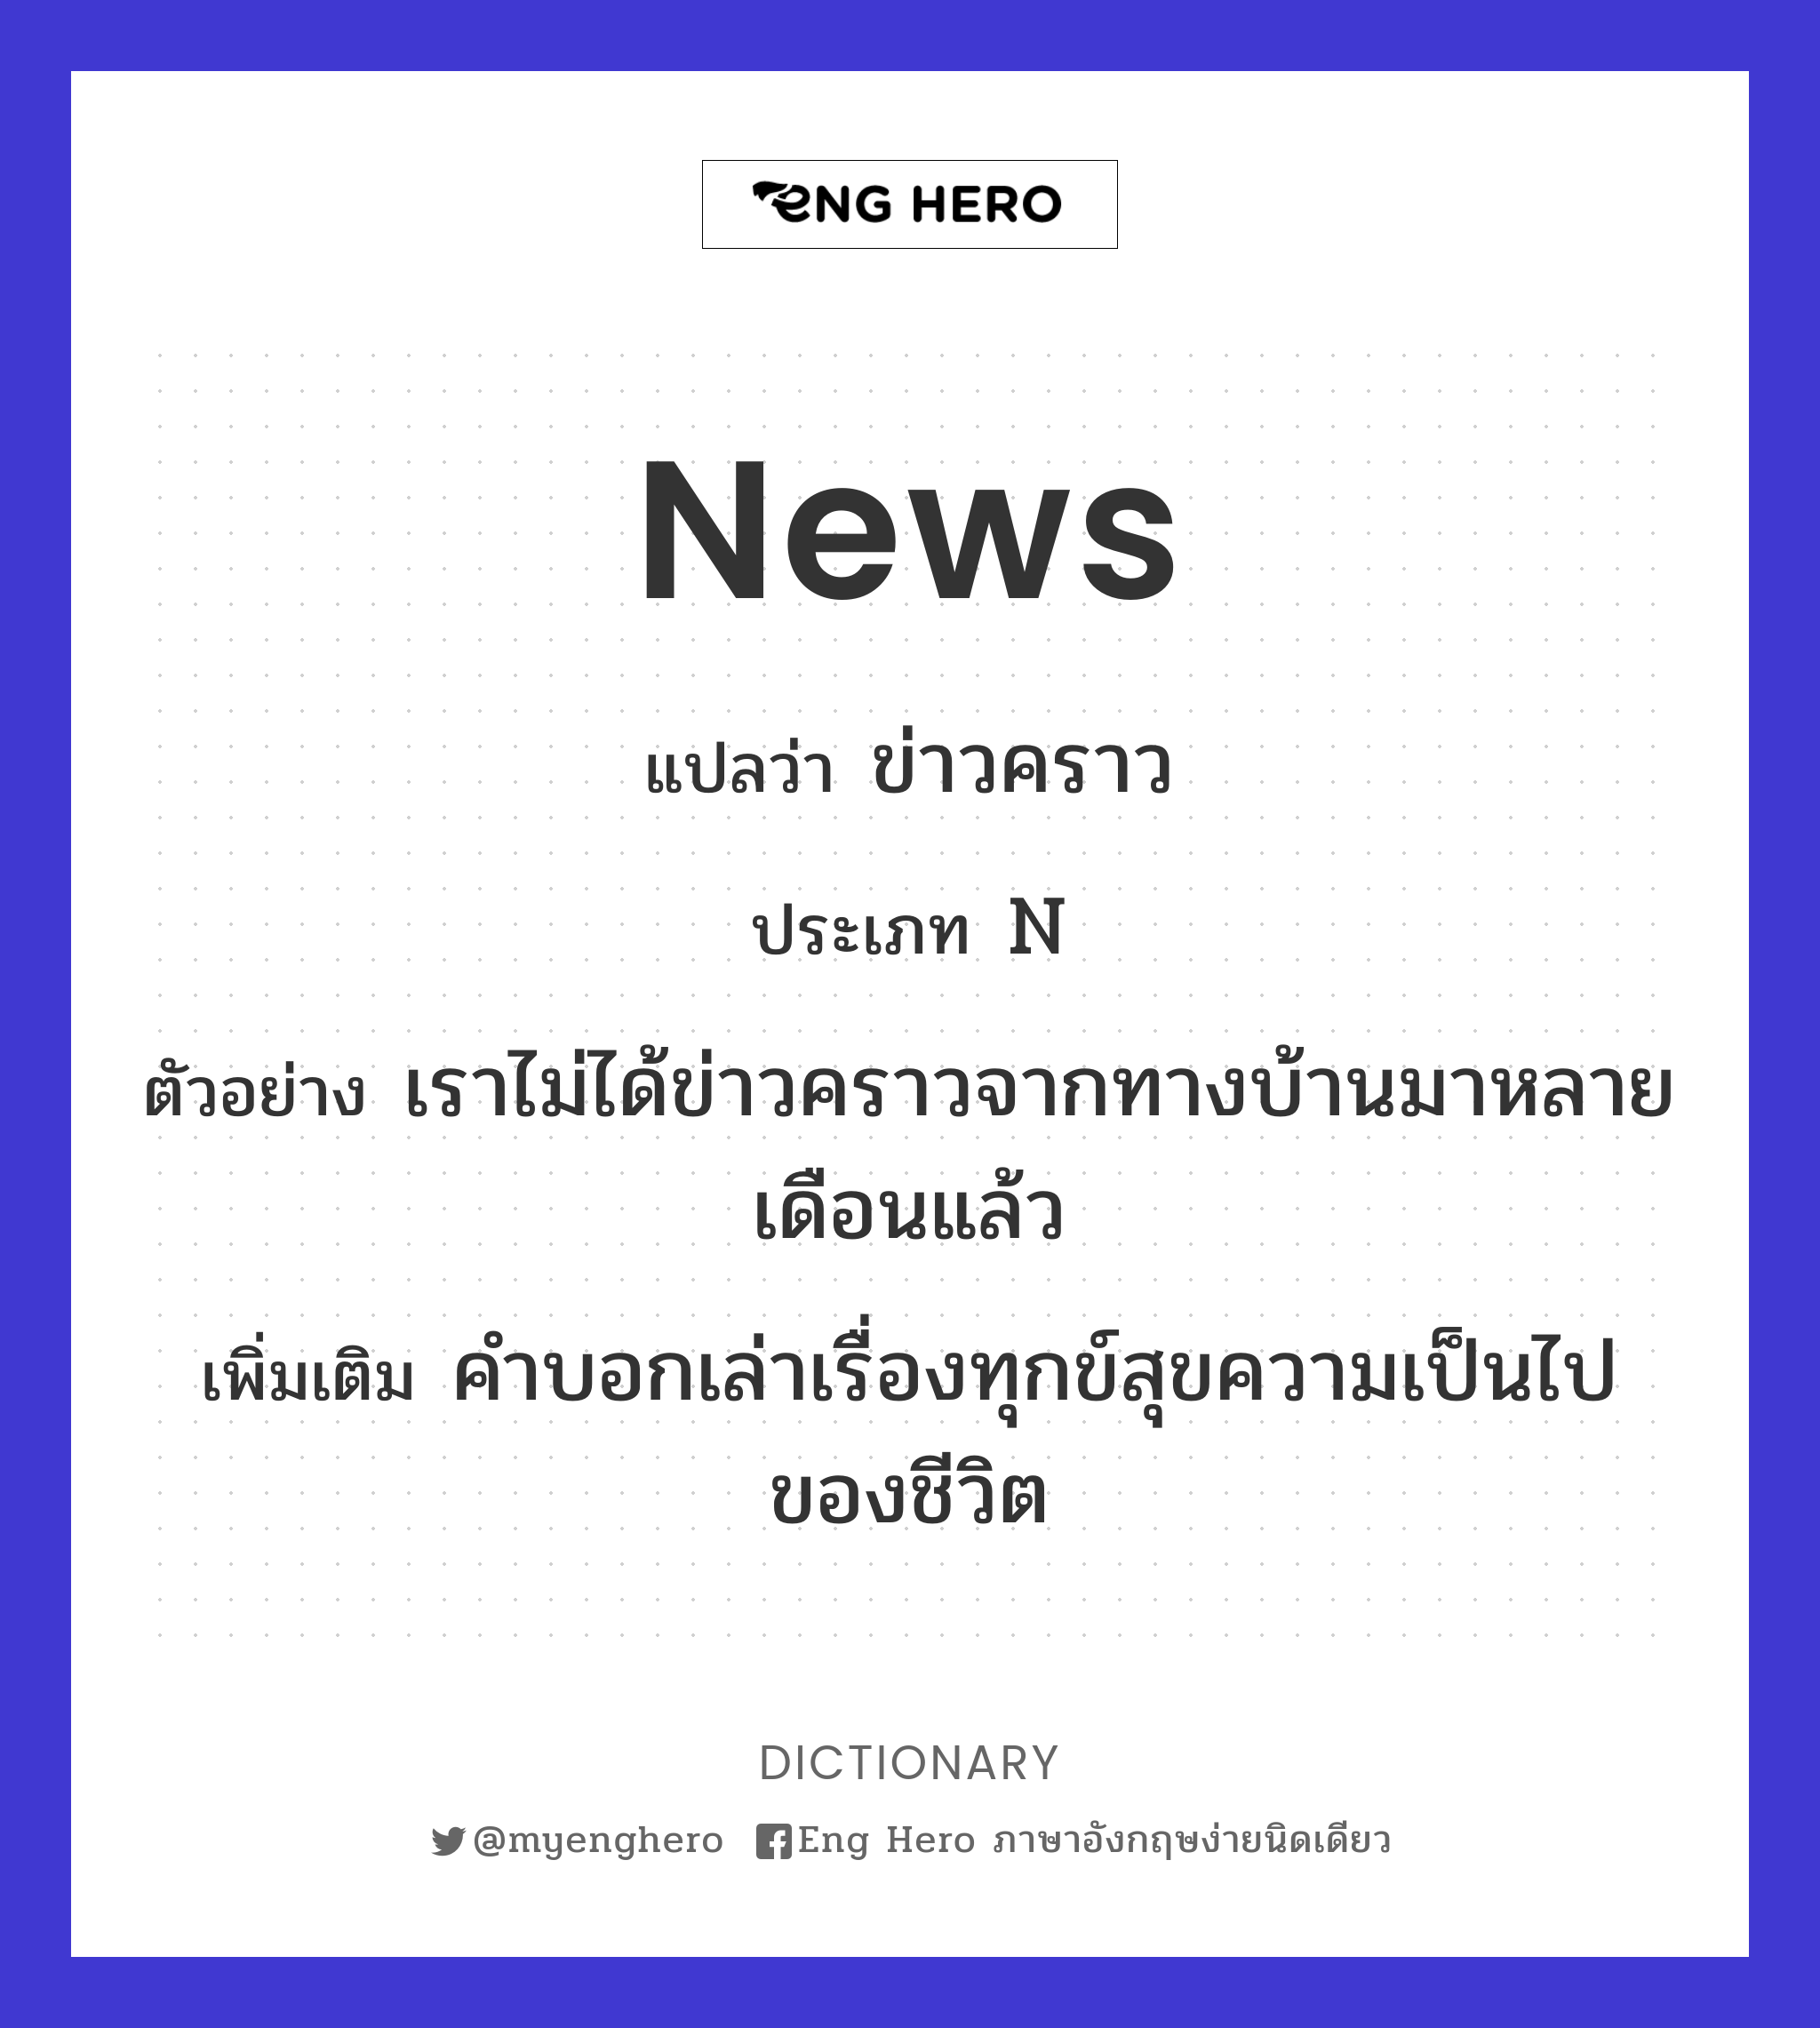 news